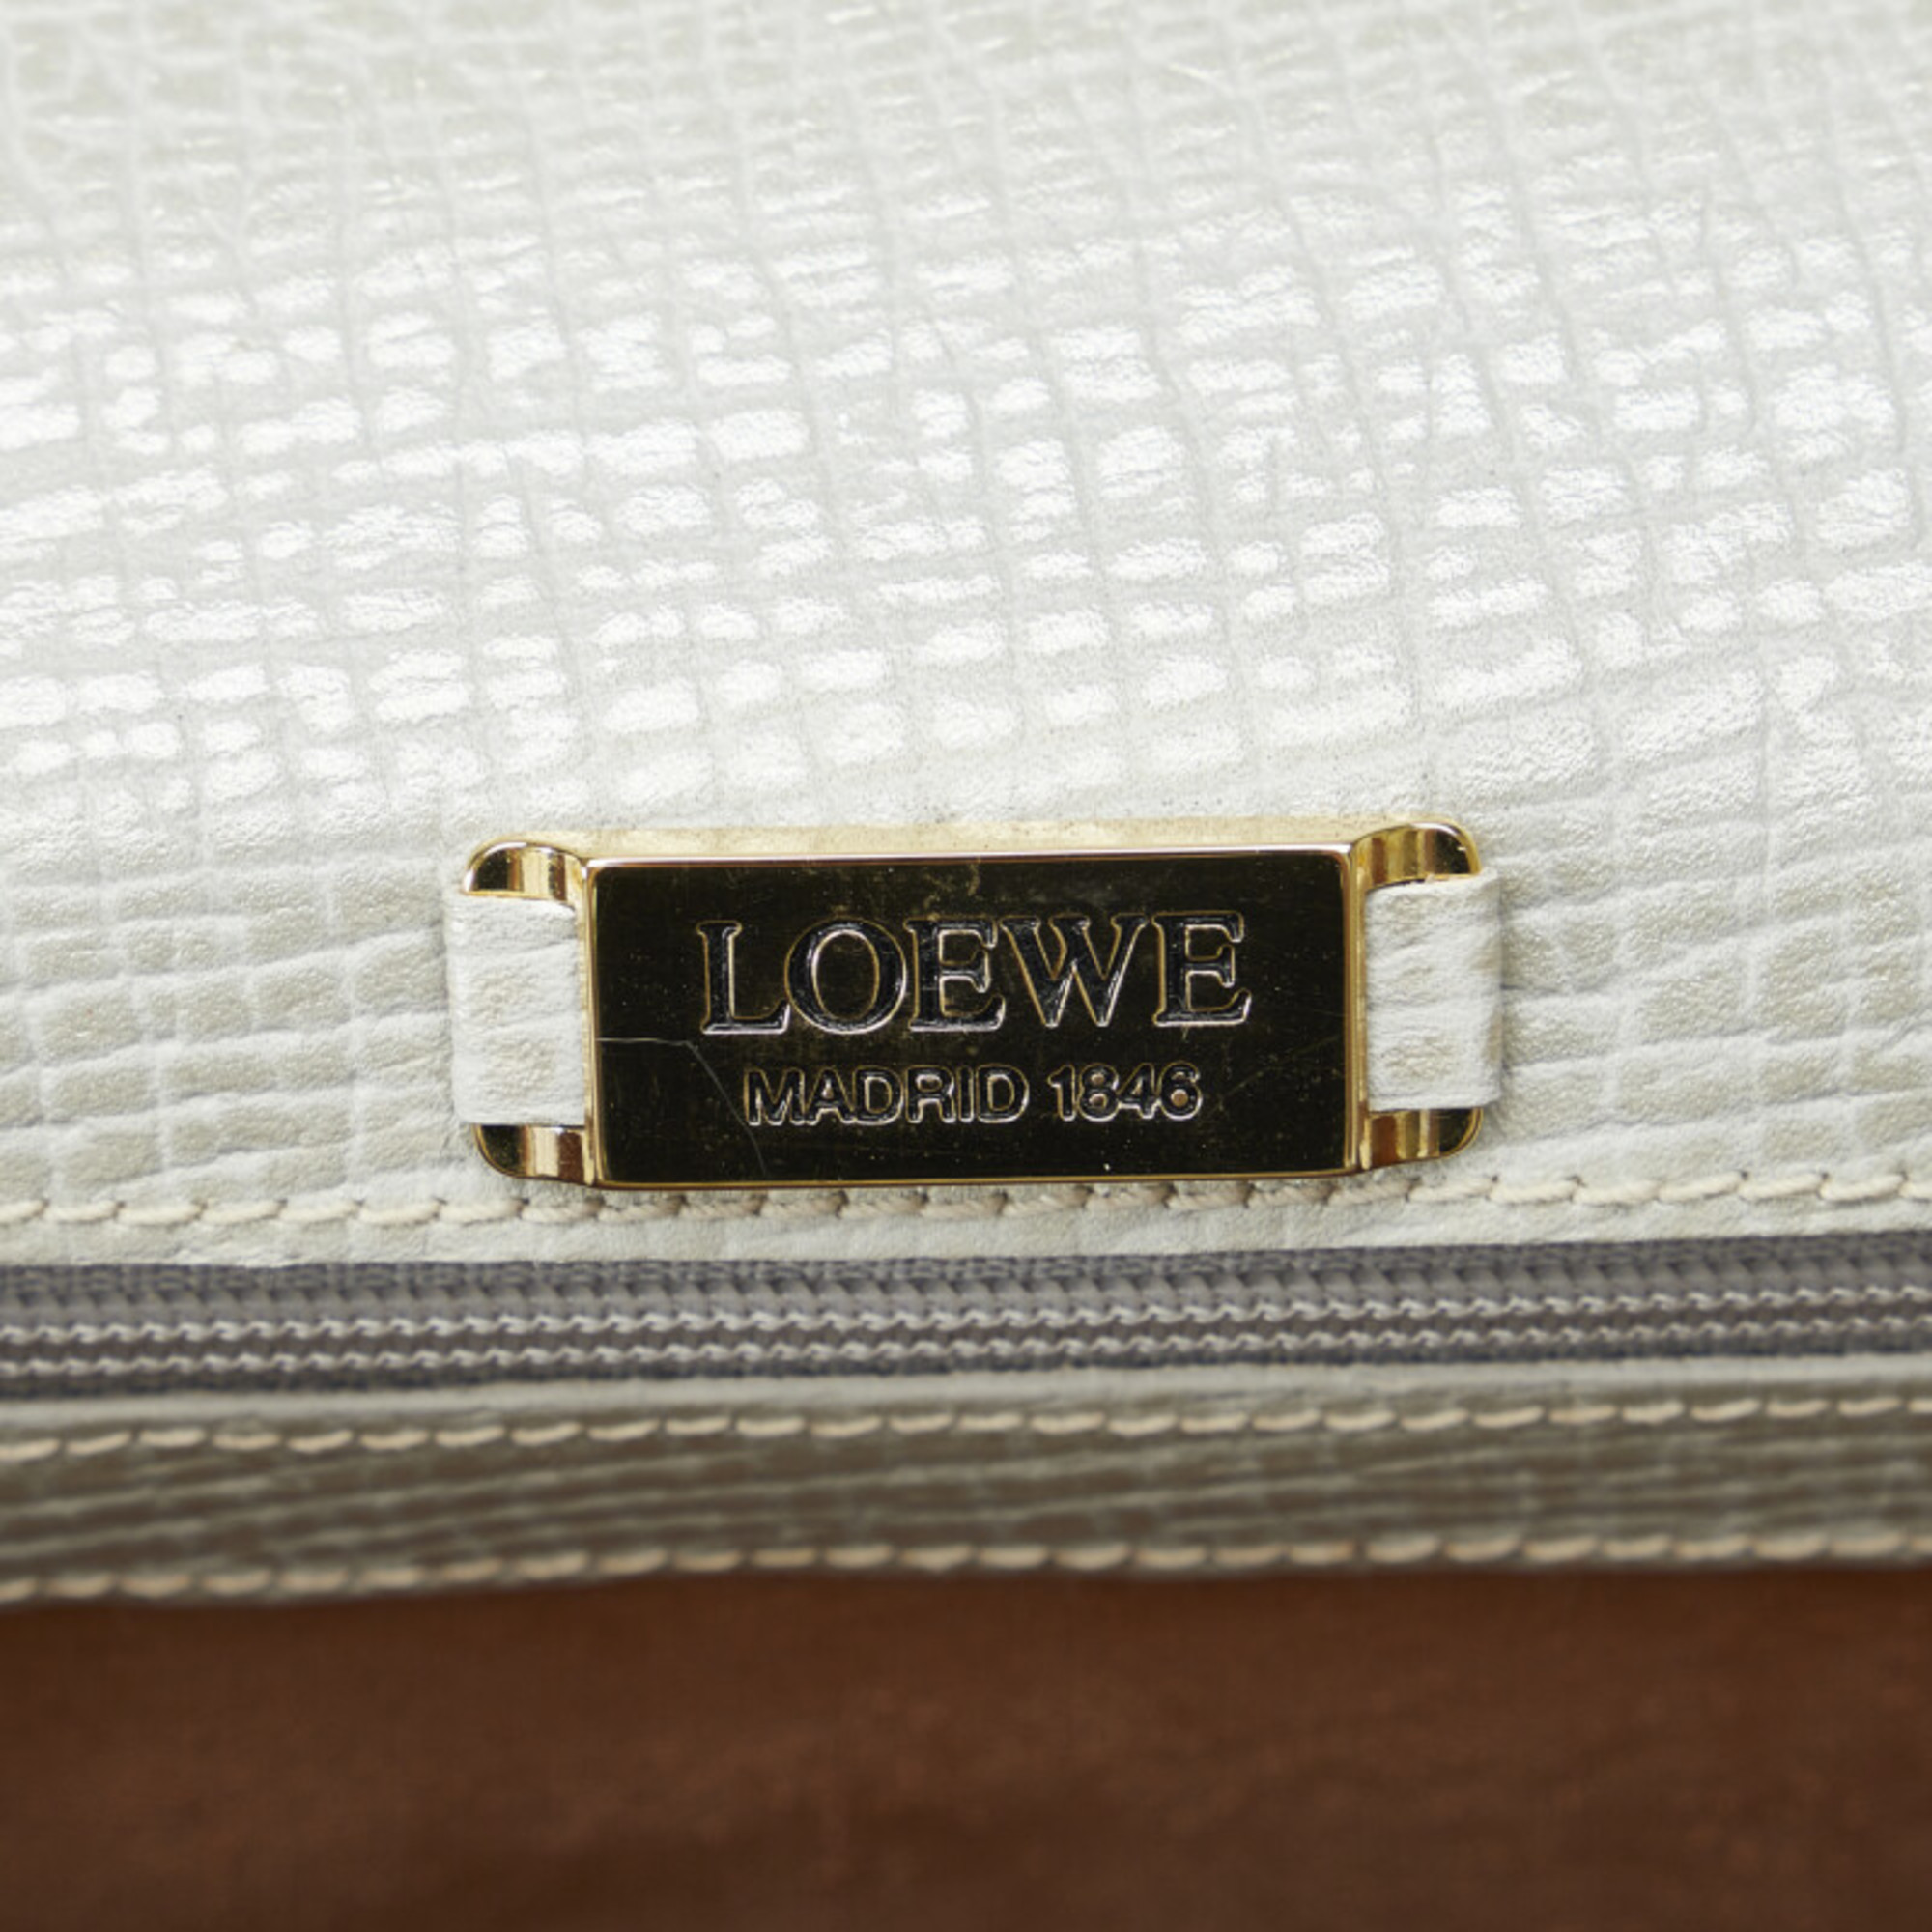 Loewe Barcelona handbag white leather ladies LOEWE